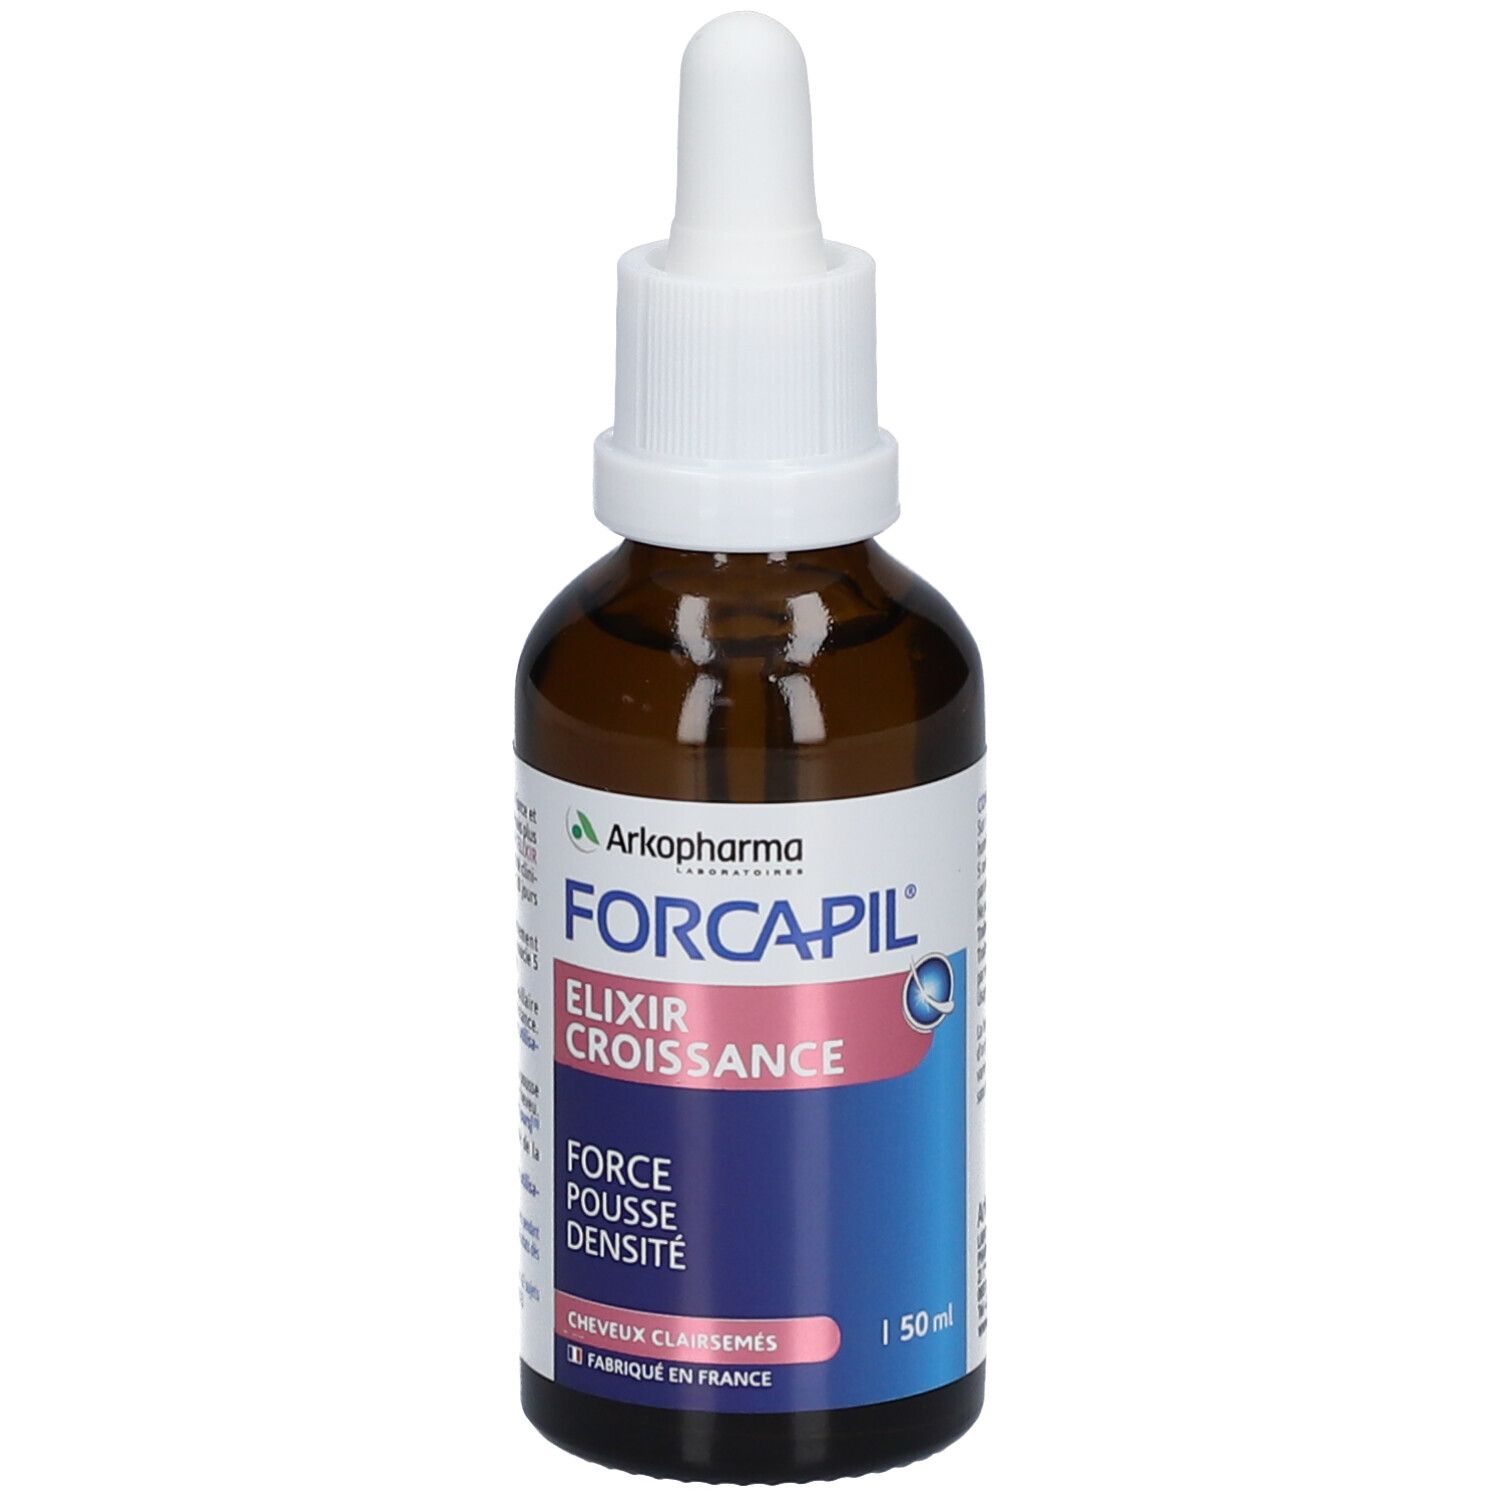 Arkopharma Forcapil® Elixir Croissance